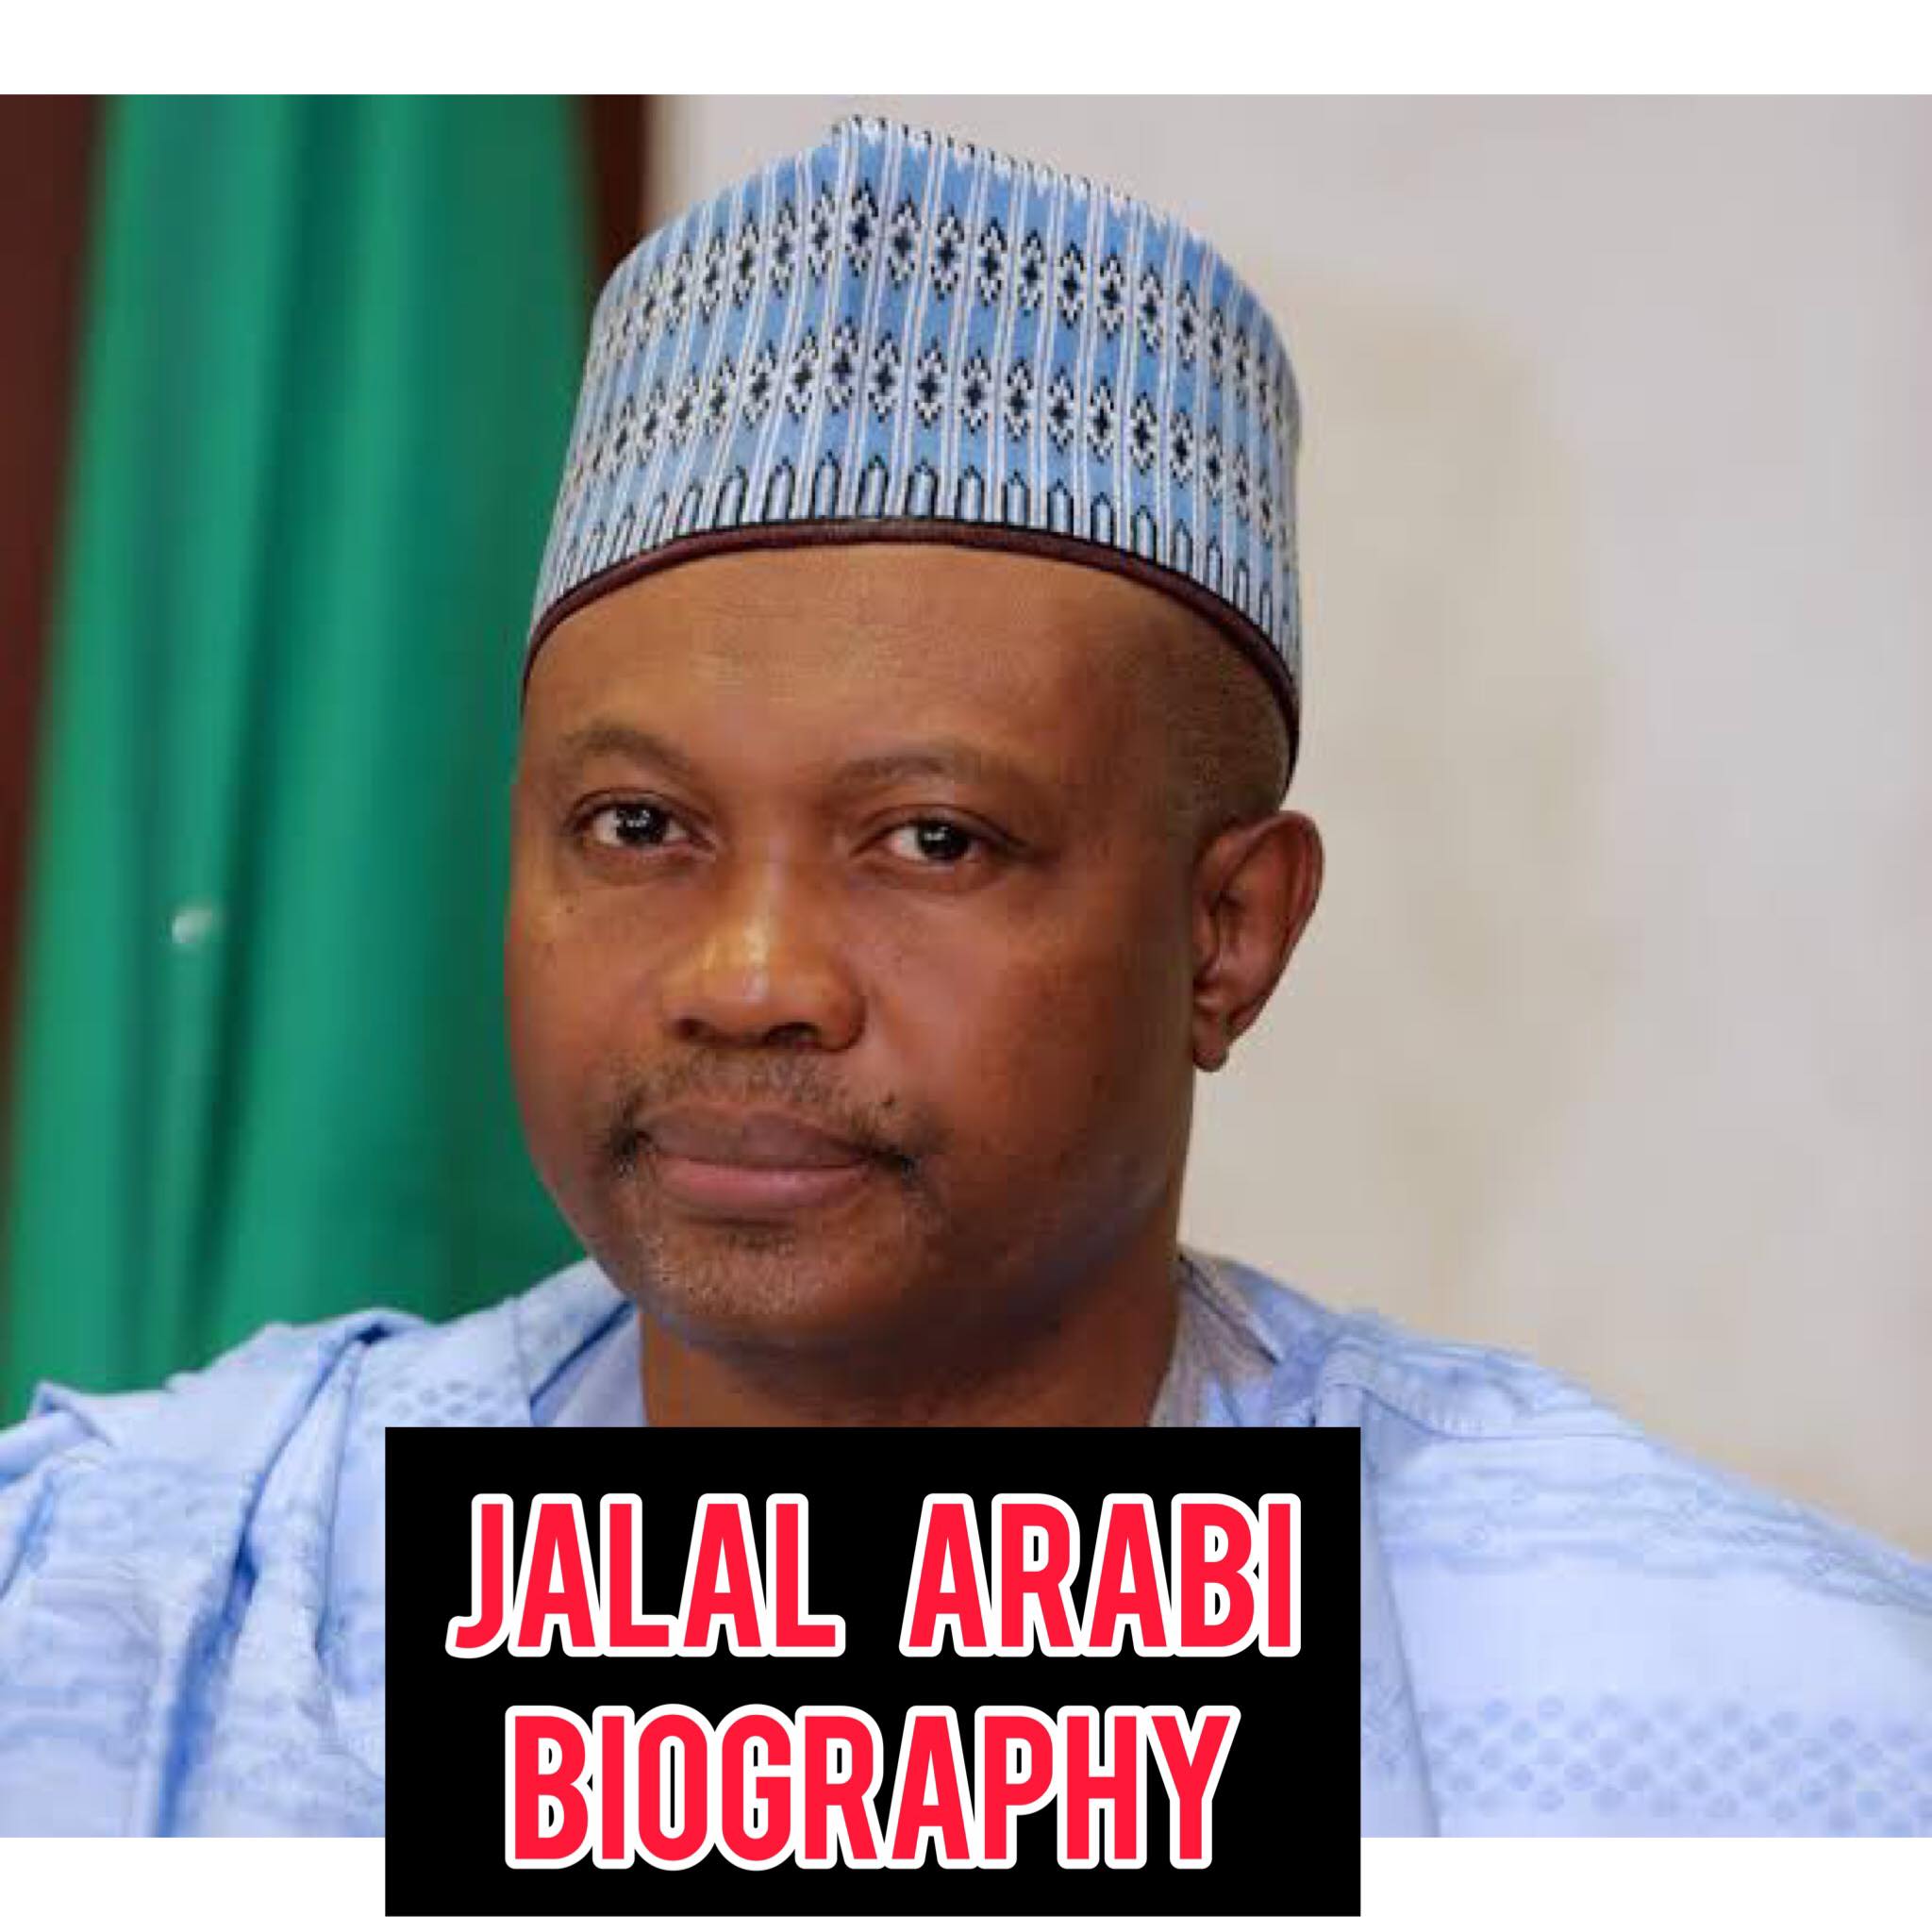 Jalal Arabi Biography